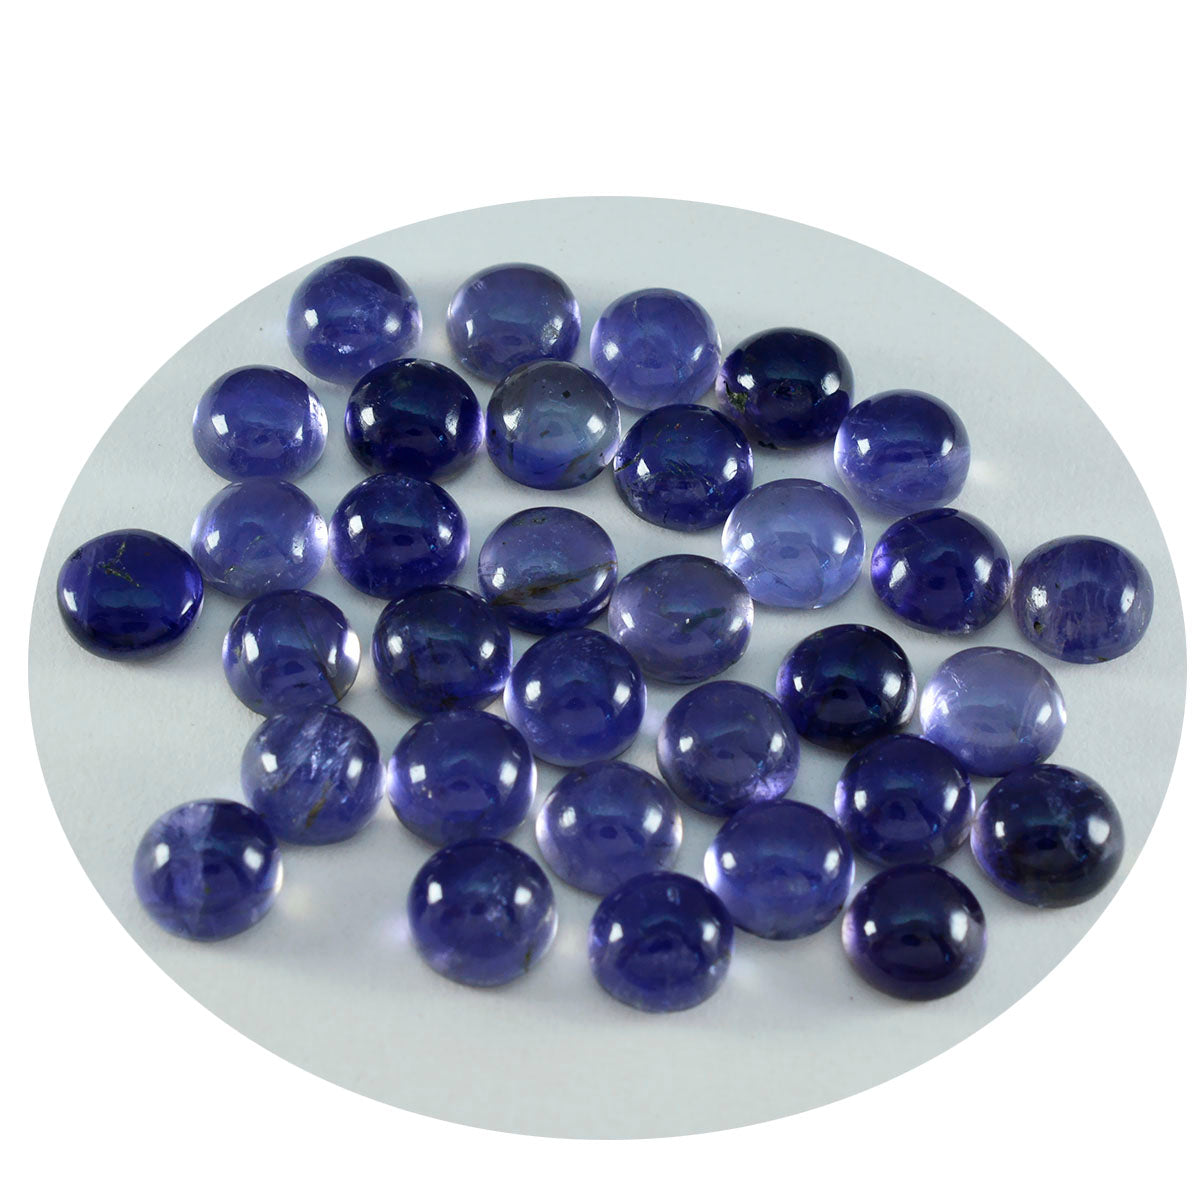 Riyogems 1PC Blue Iolite Cabochon 7x7 mm Round Shape A+ Quality Loose Gem